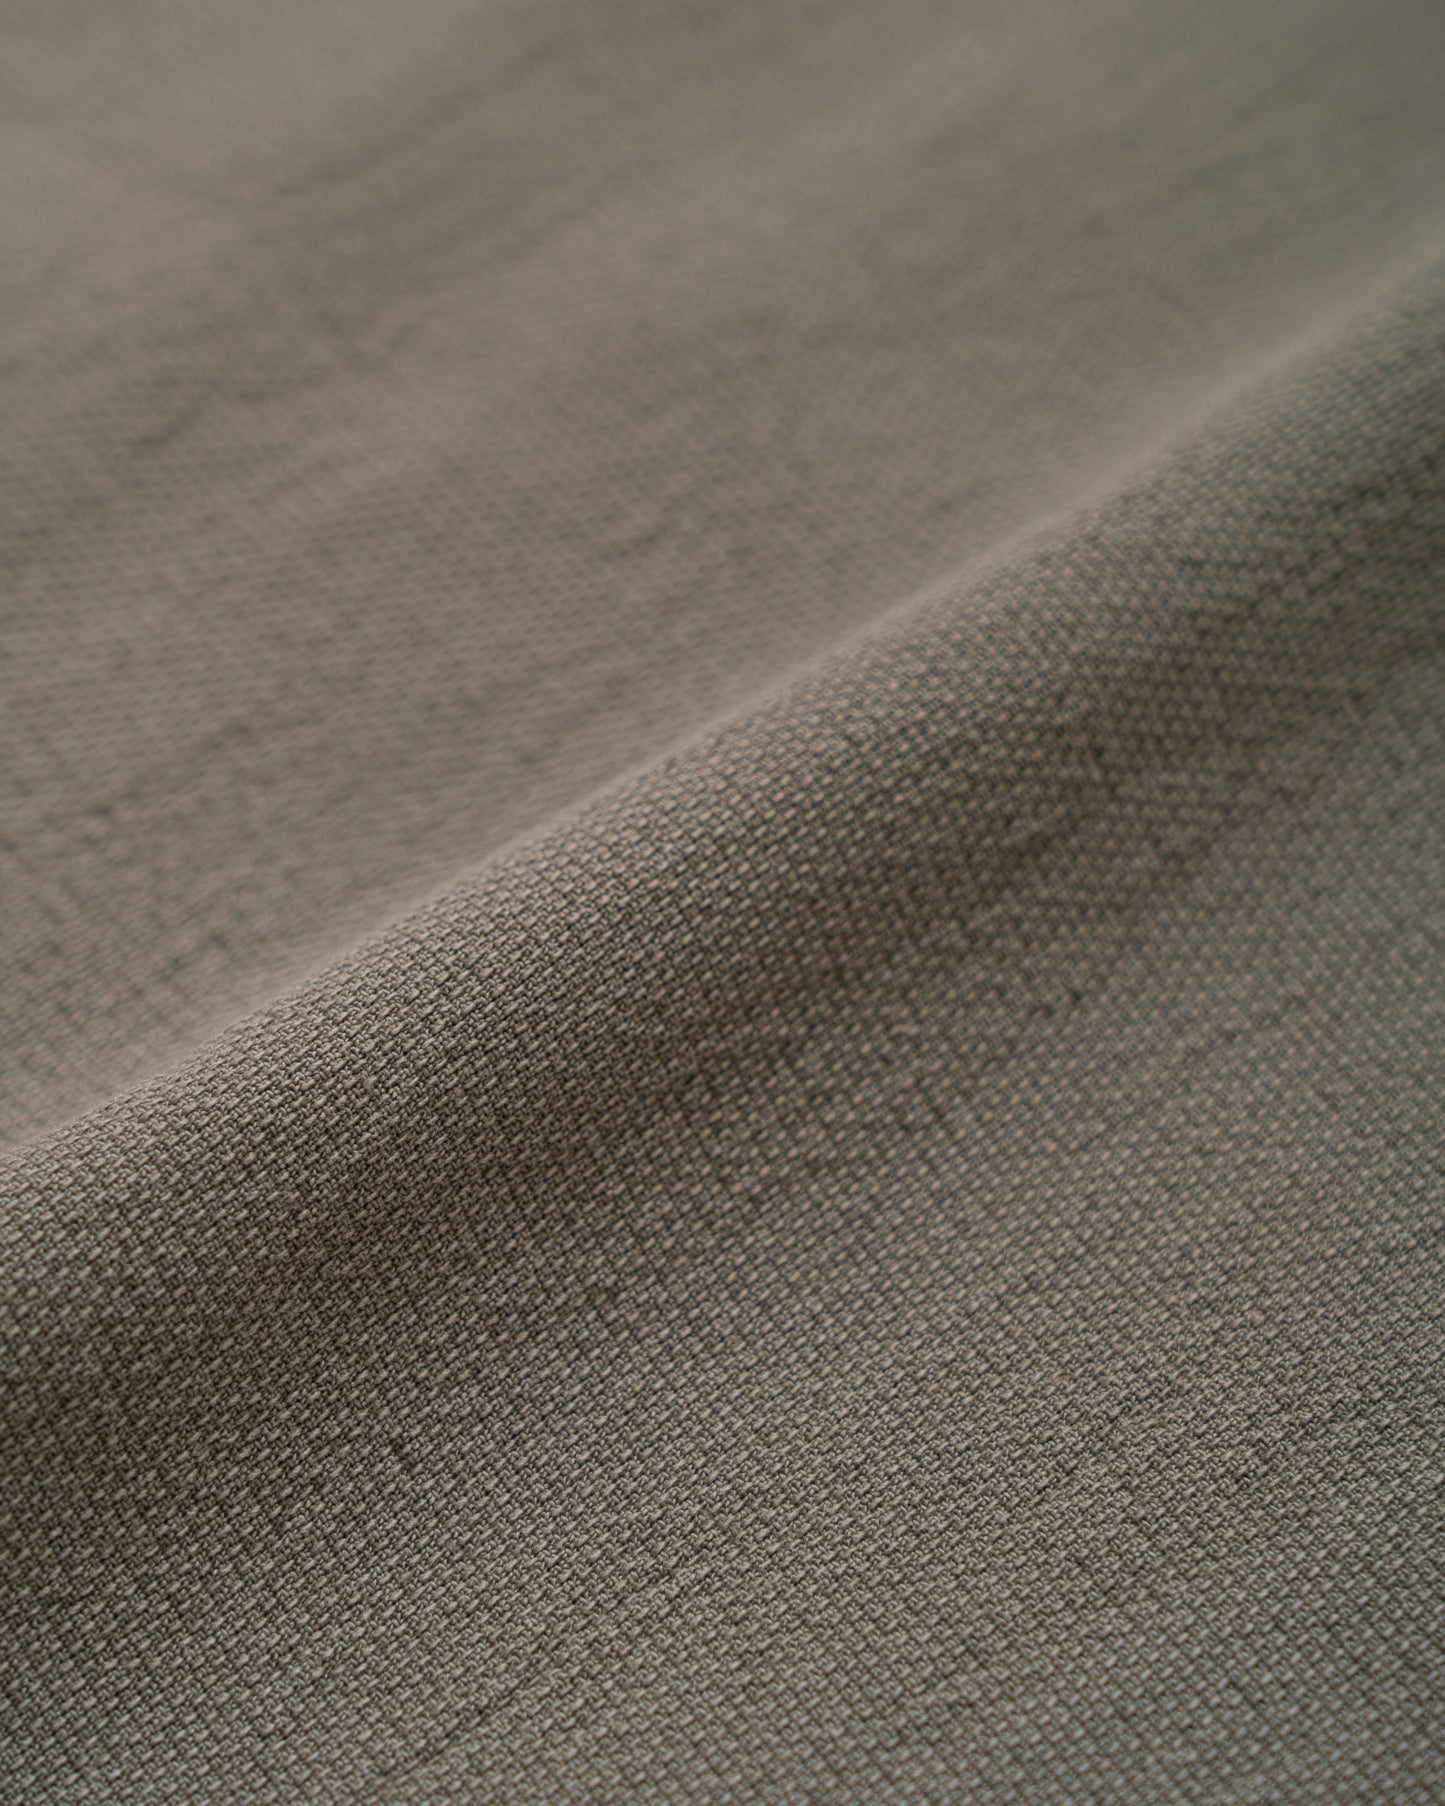 Horizon Crinkle L/S Shirt - Dried Sage